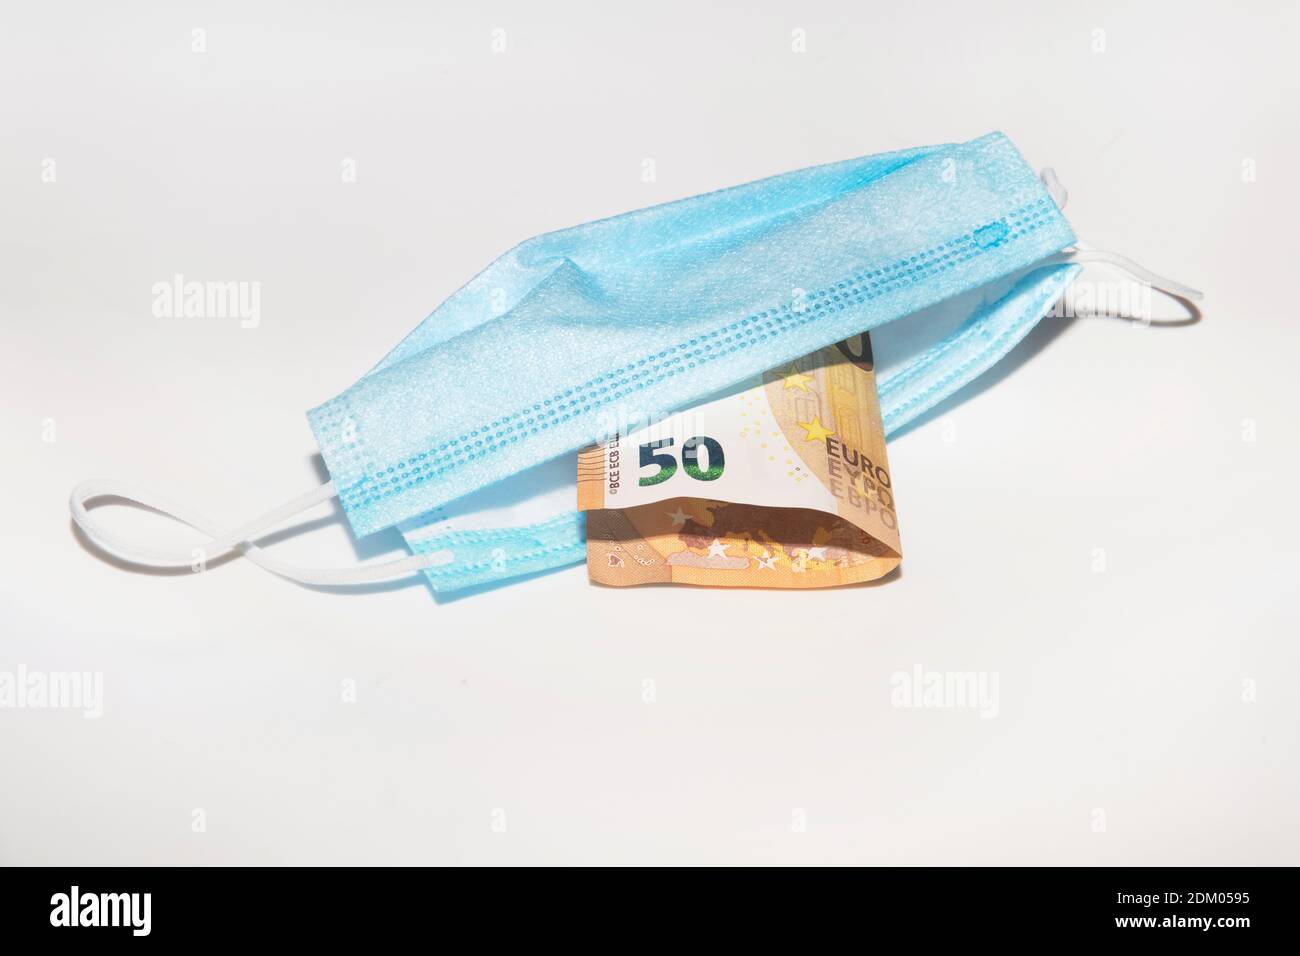 50 Euro nota coperta da una maschera di protezione covid-19 Foto Stock